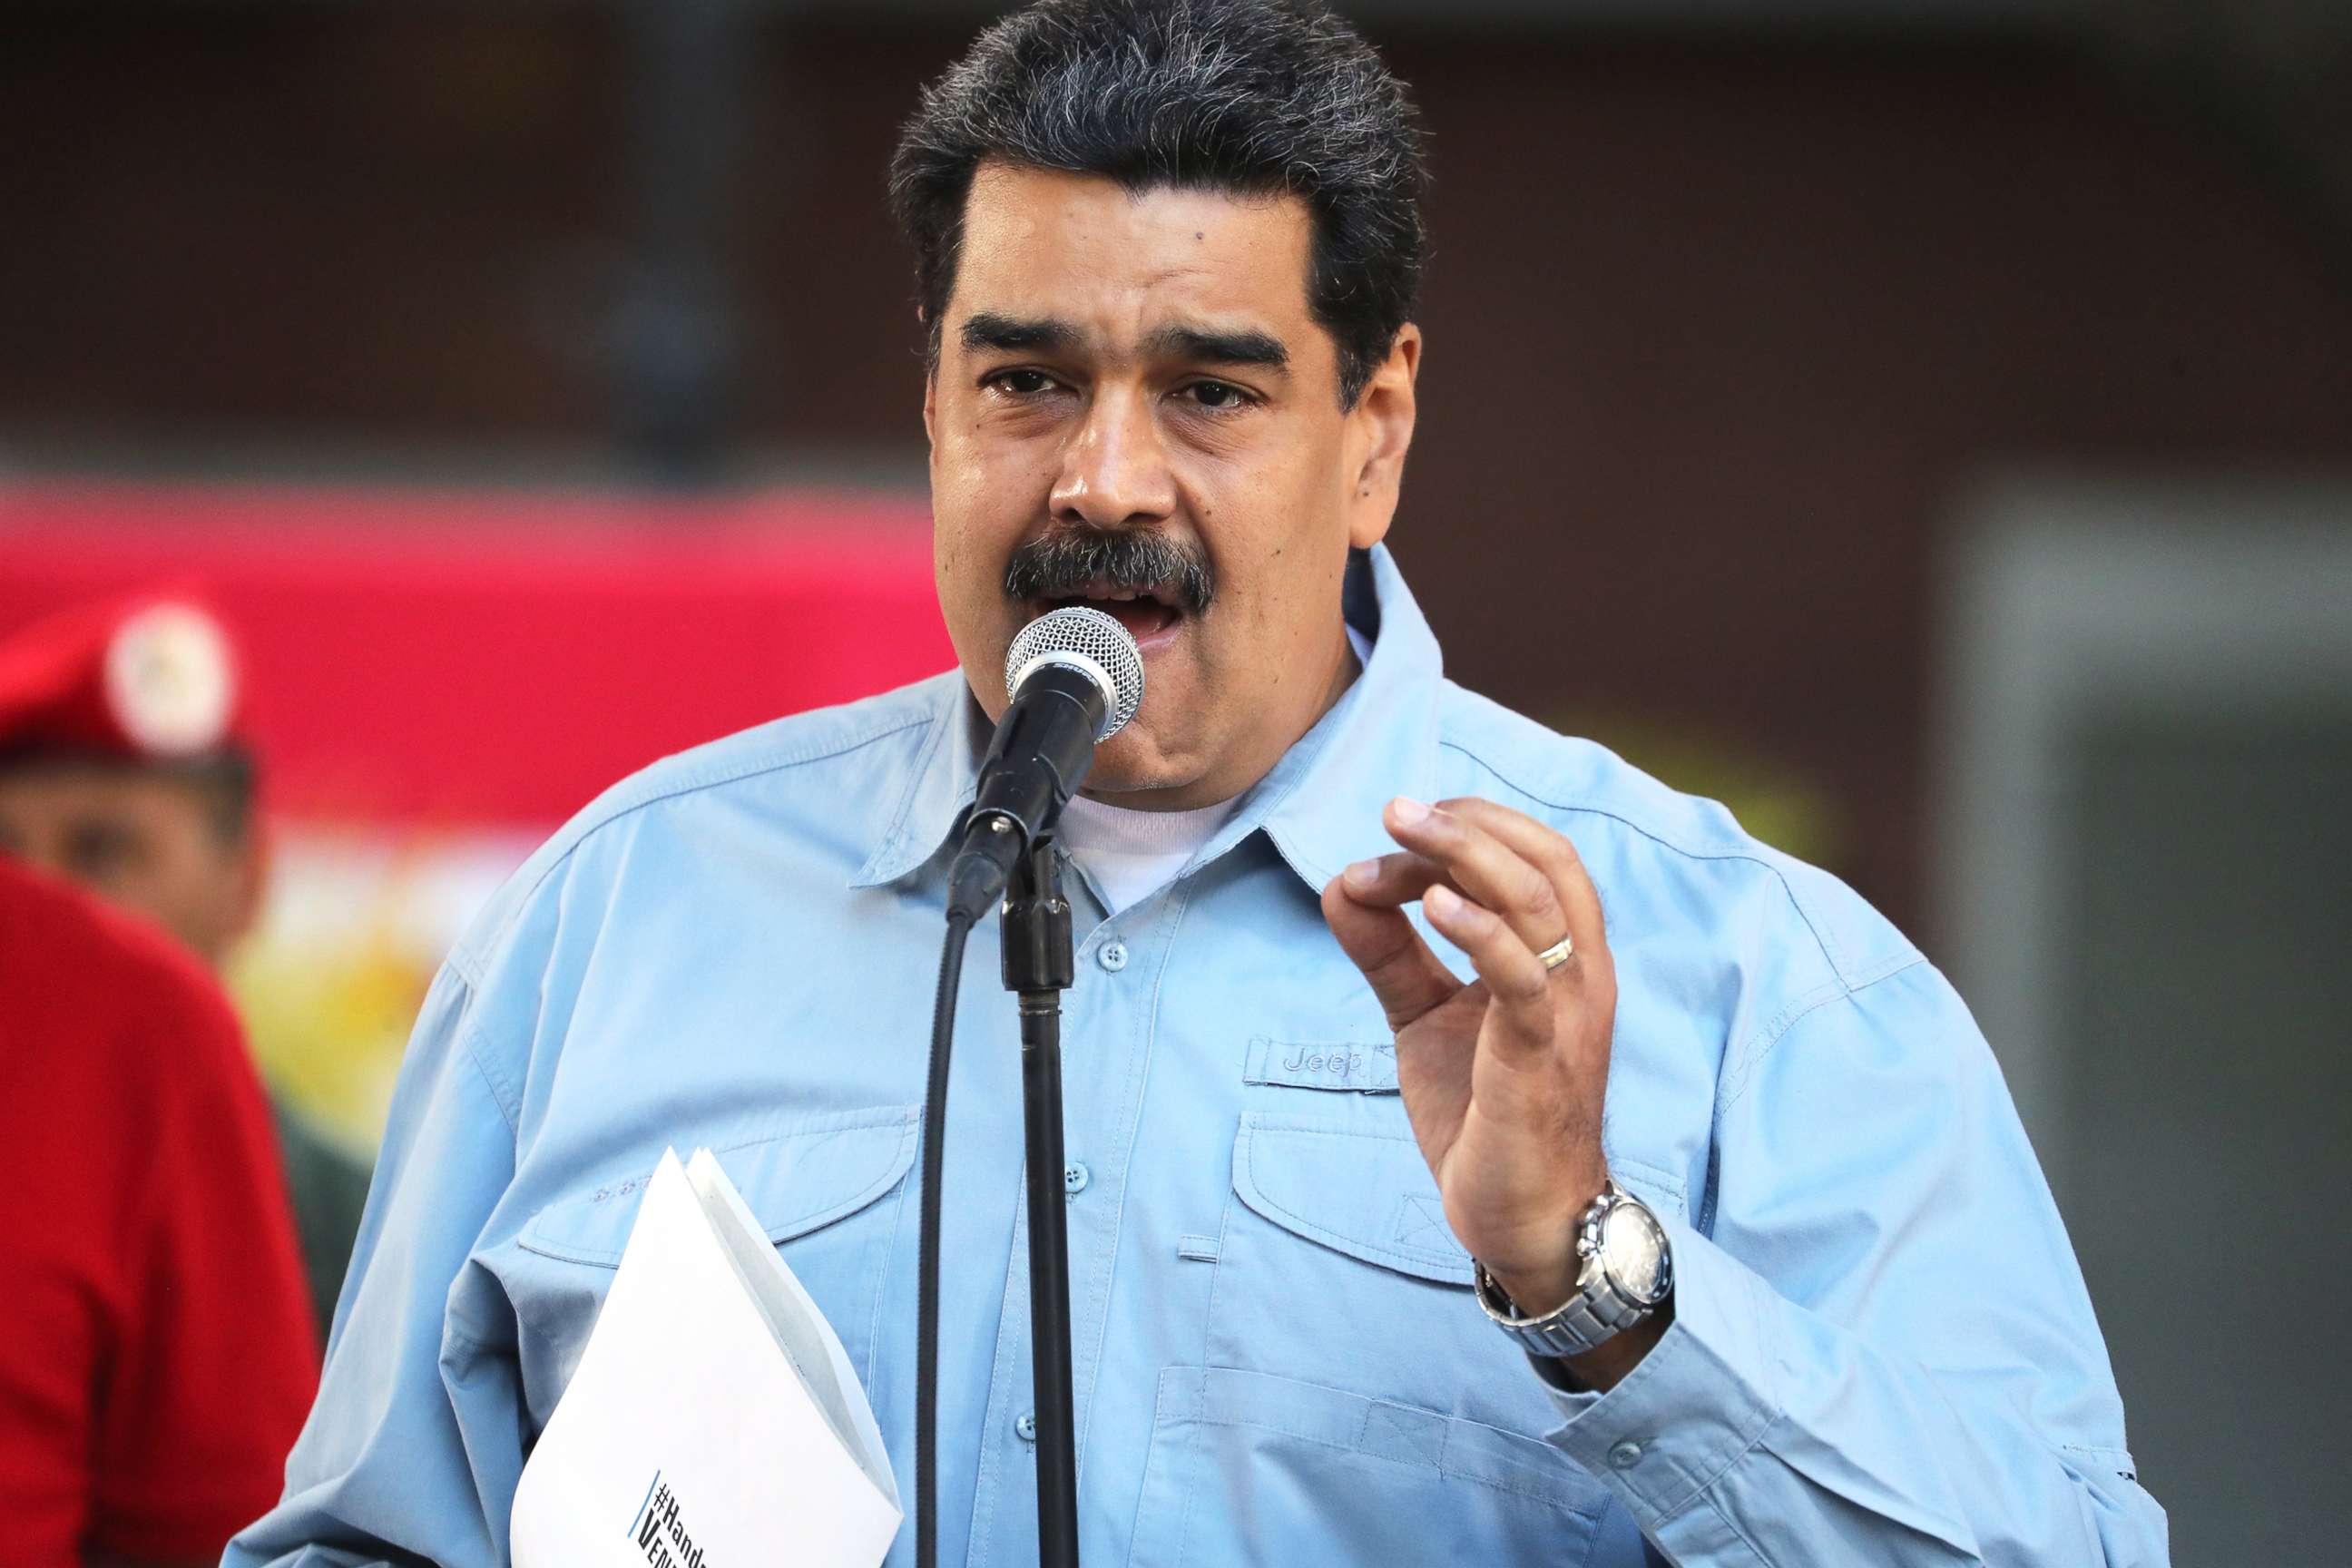 PHOTO: Venezuelan President Nicolas Maduro speaks during an event at Bolivar Square, in Caracas, Venezuela, Feb. 07, 2019.